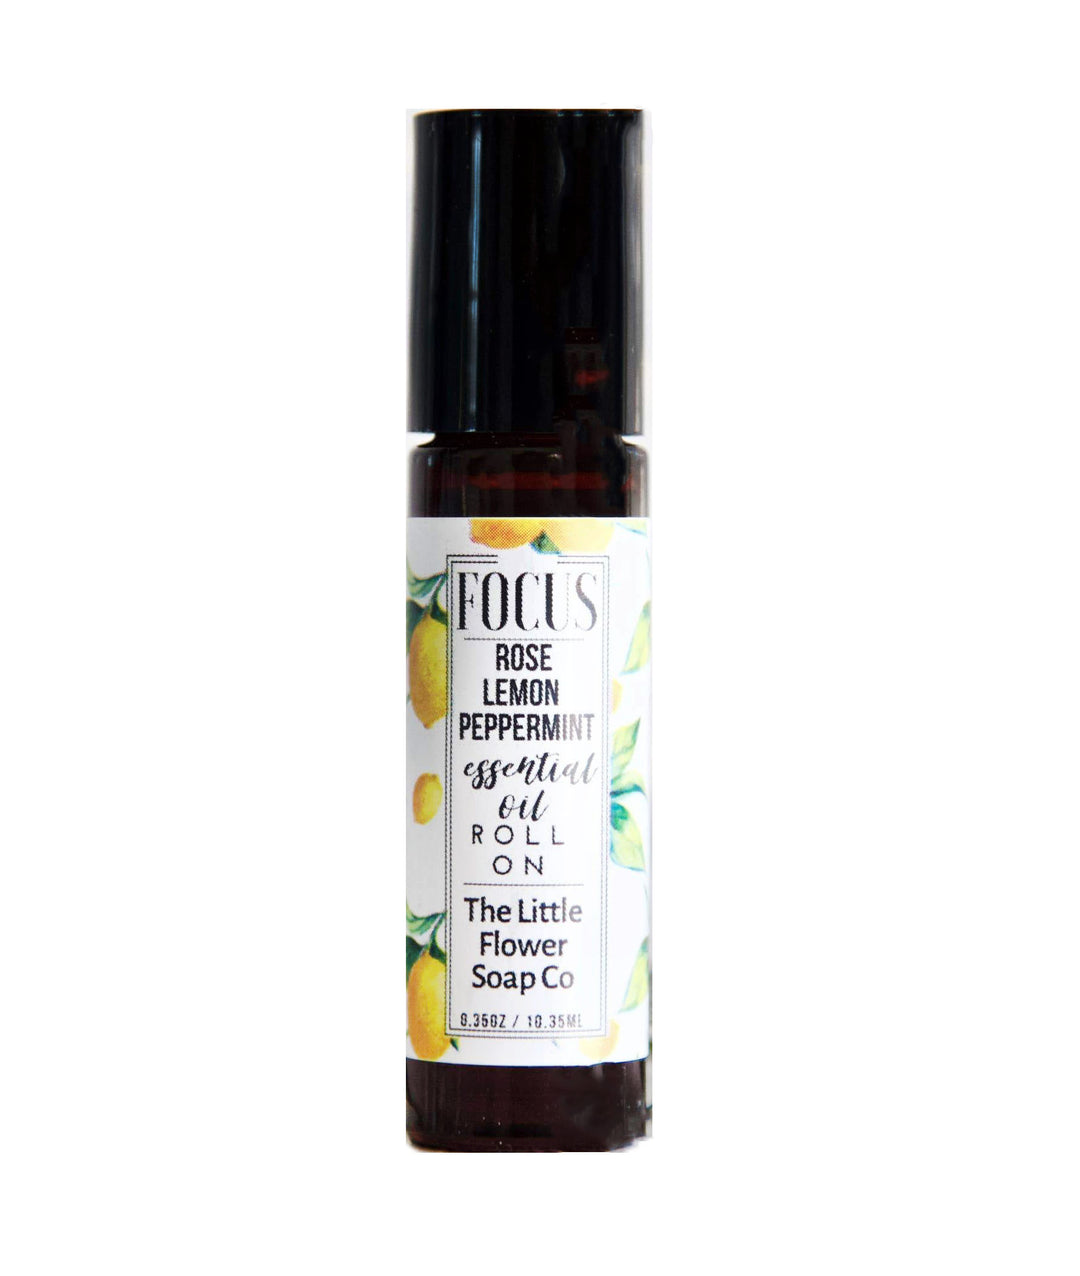 Rose Lemon Peppermint Essential Oil Roll-on Aromatherapy - Gabrielle's Biloxi